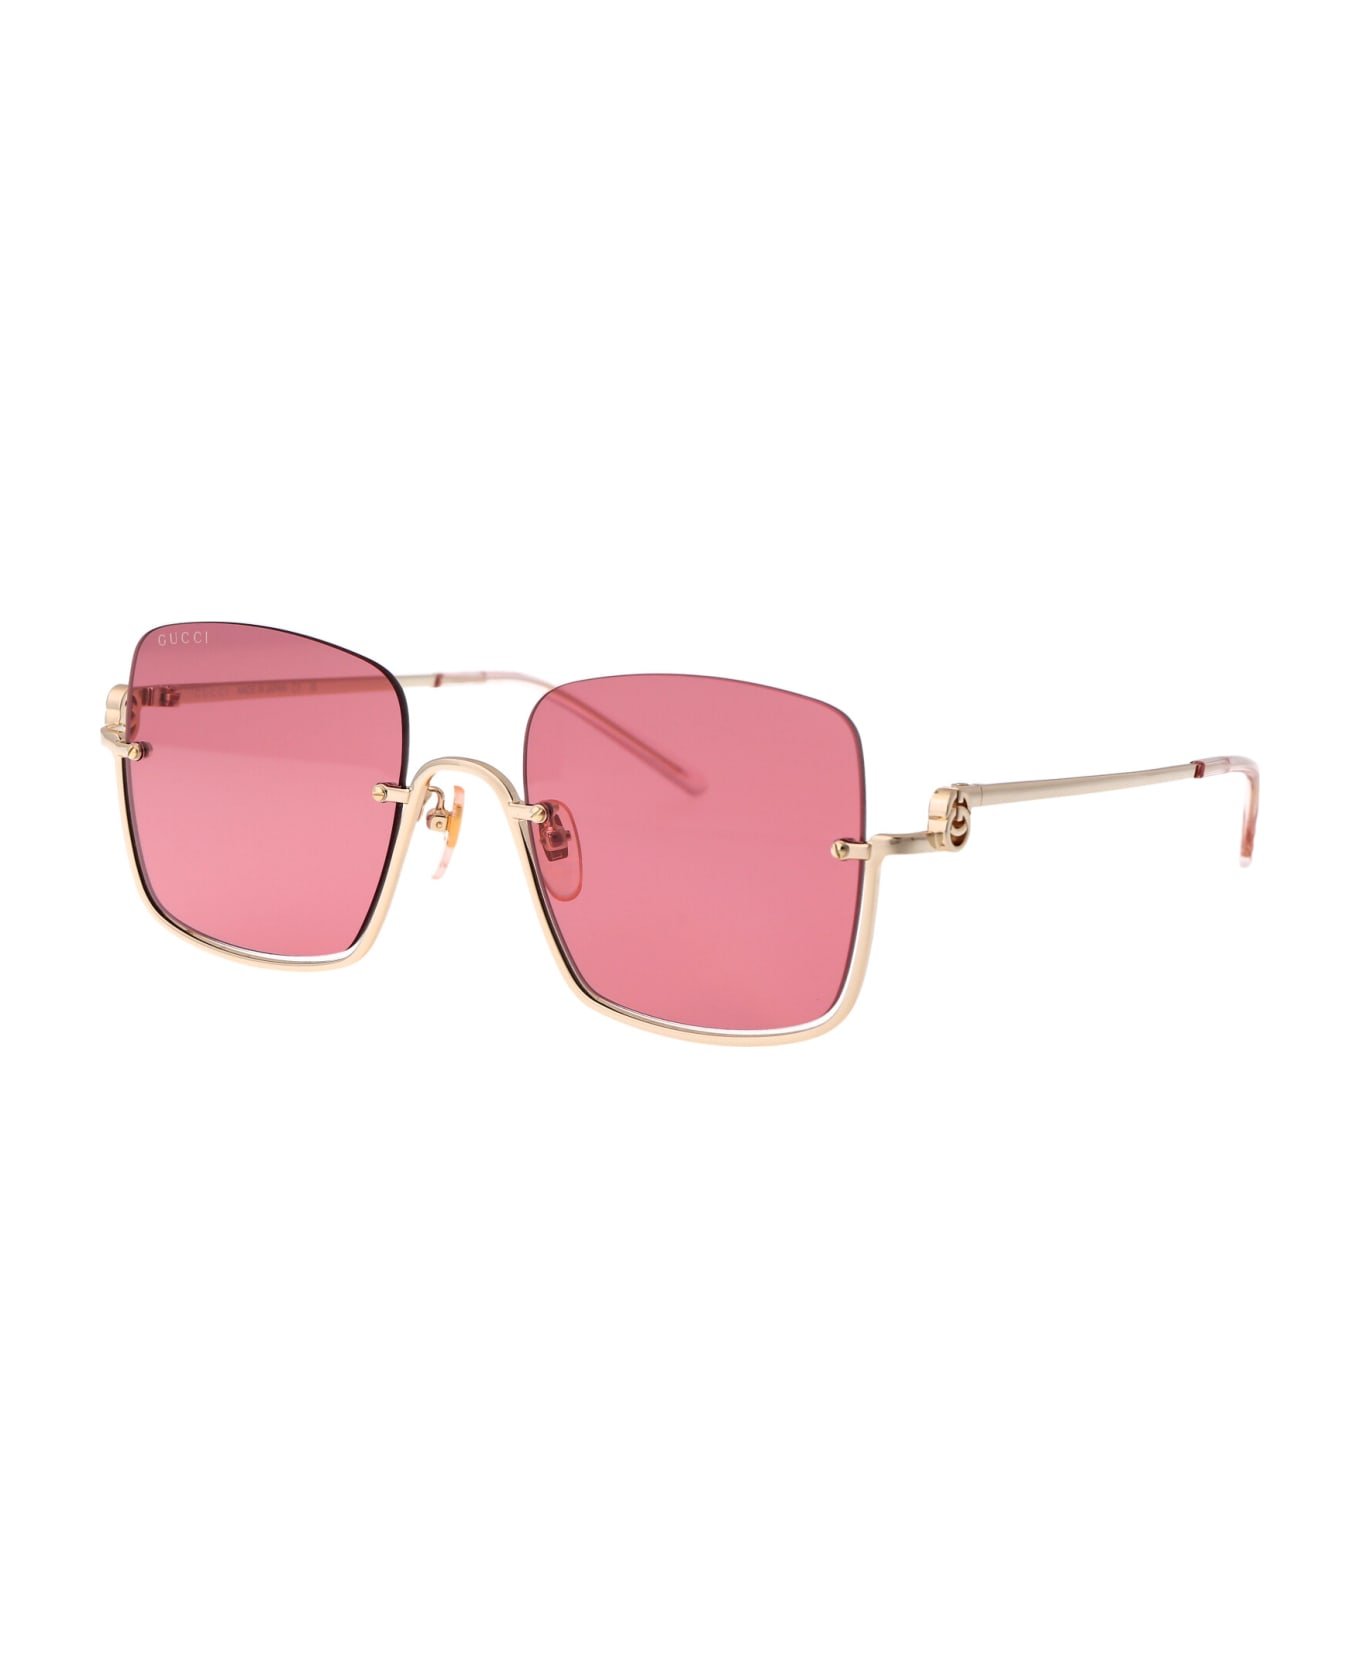 Gucci Eyewear Gg1279s Sunglasses - 003 GOLD GOLD RED